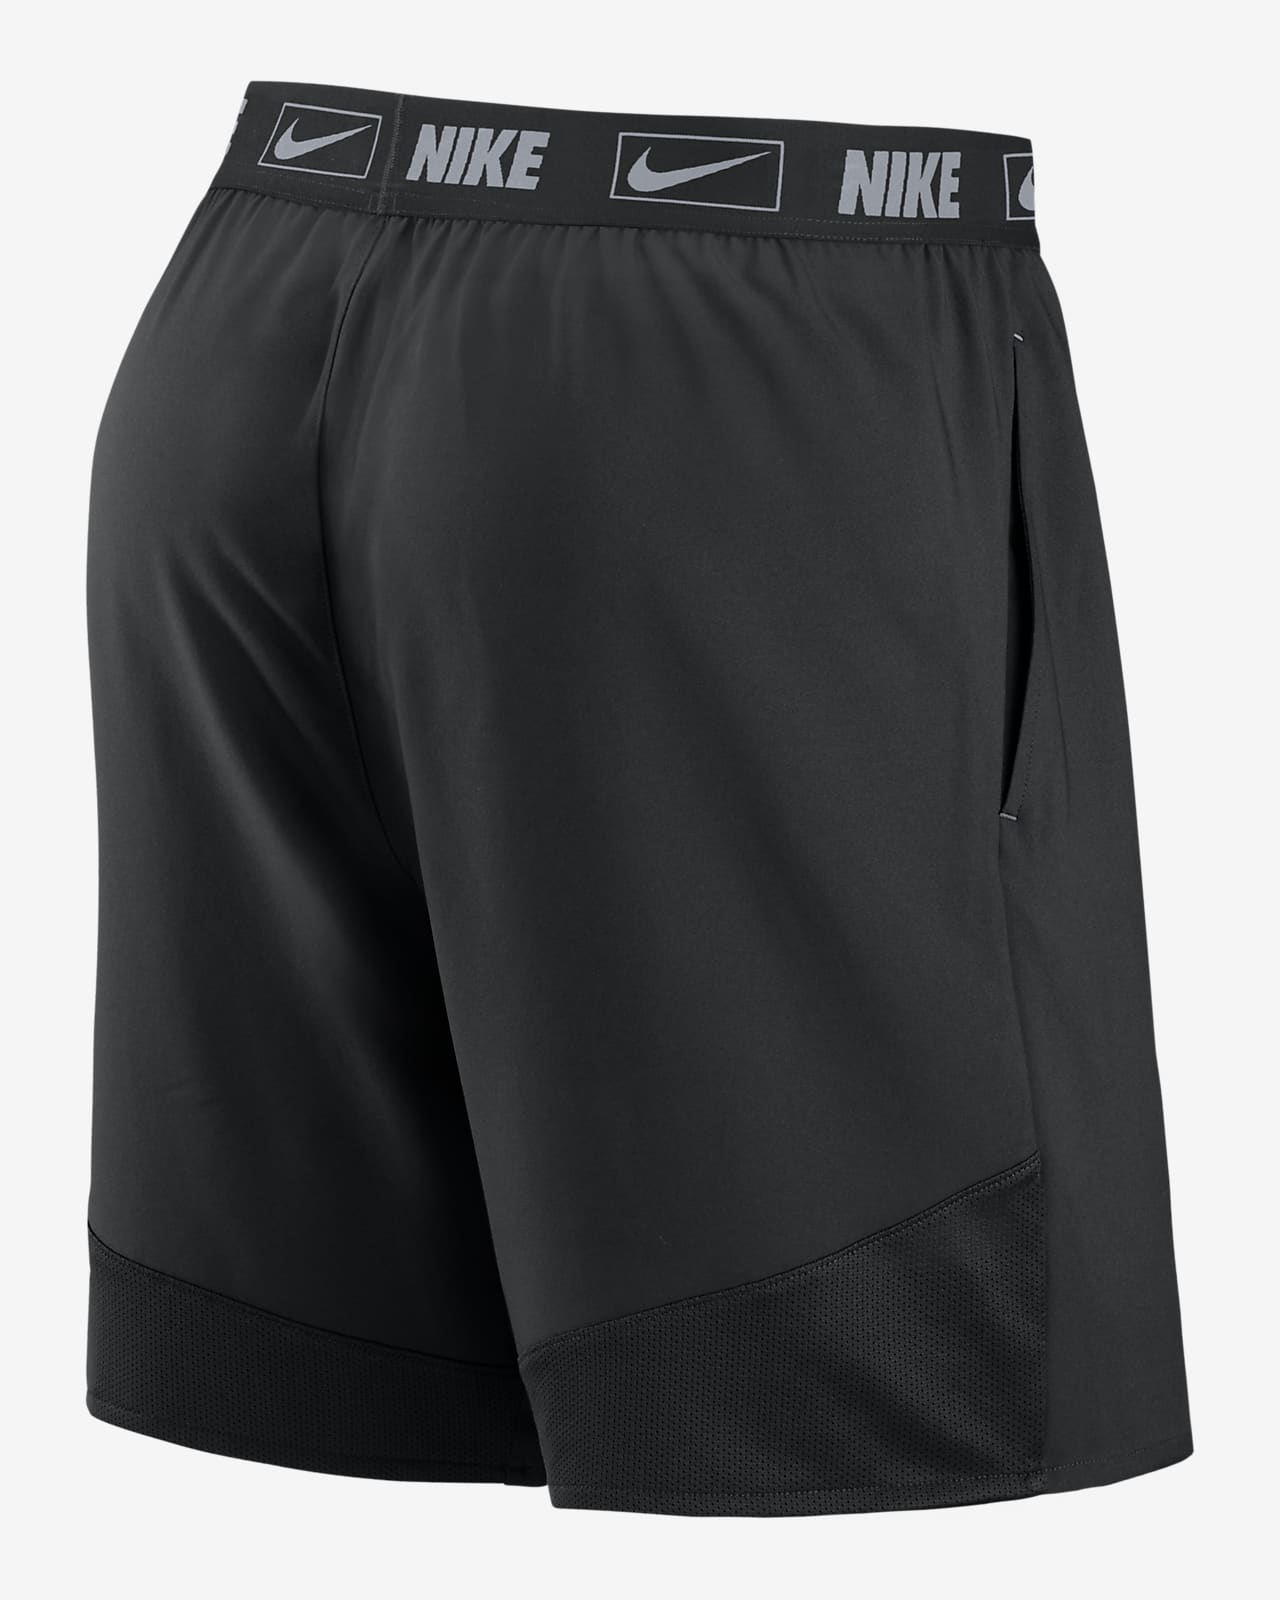 Nike Dri-FIT Bold Express (MLB Colorado Rockies) Men's Shorts